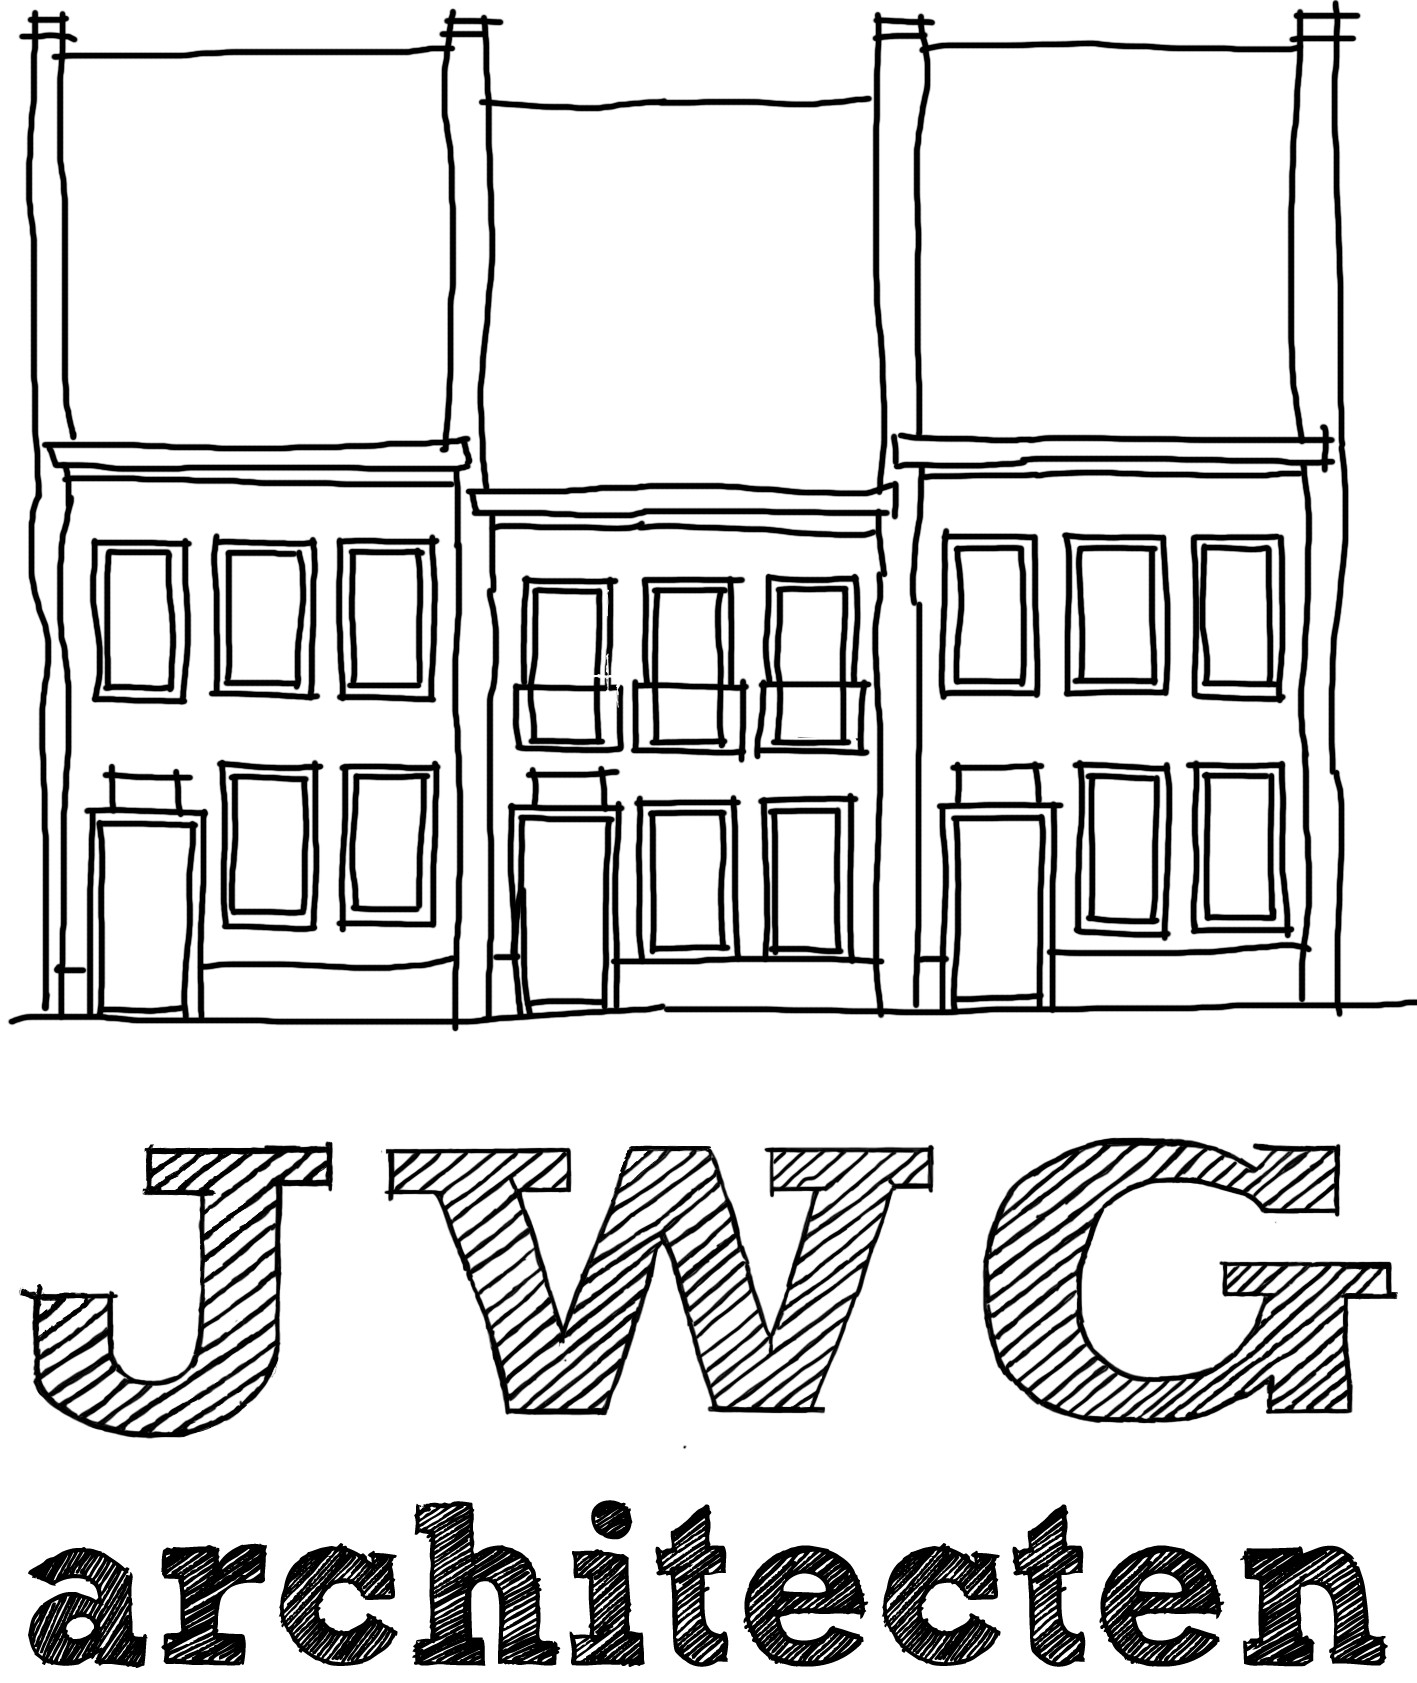 JWG Architecten